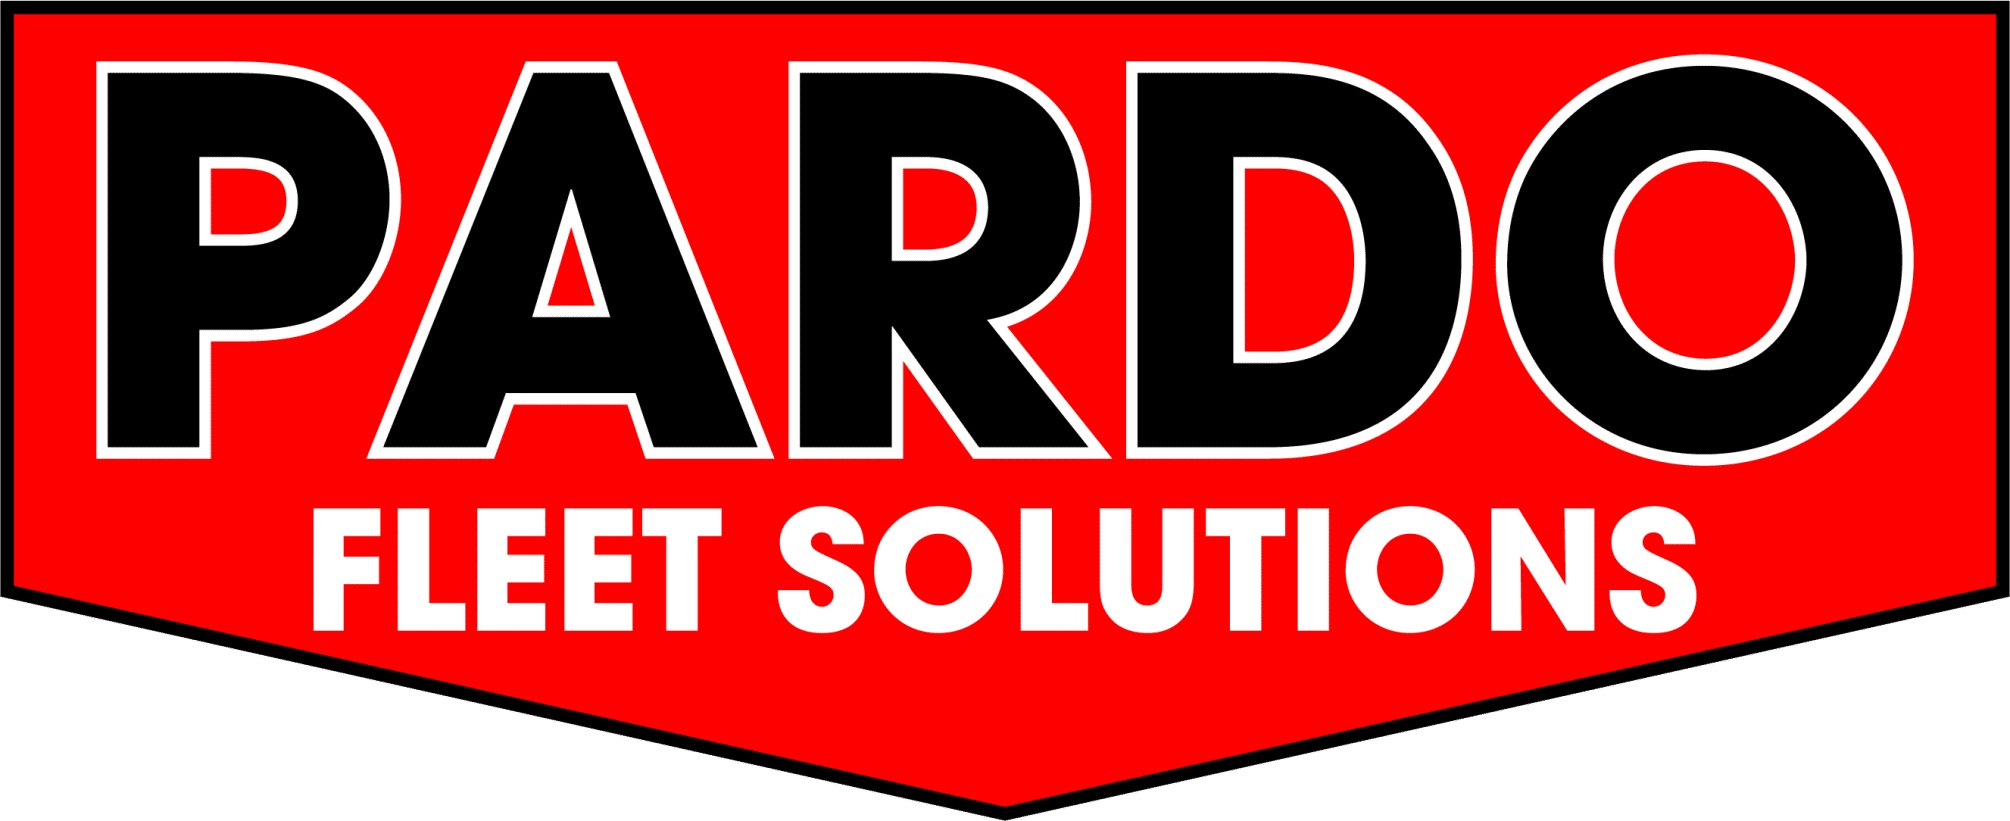 Pardo fleet Solutions Logo